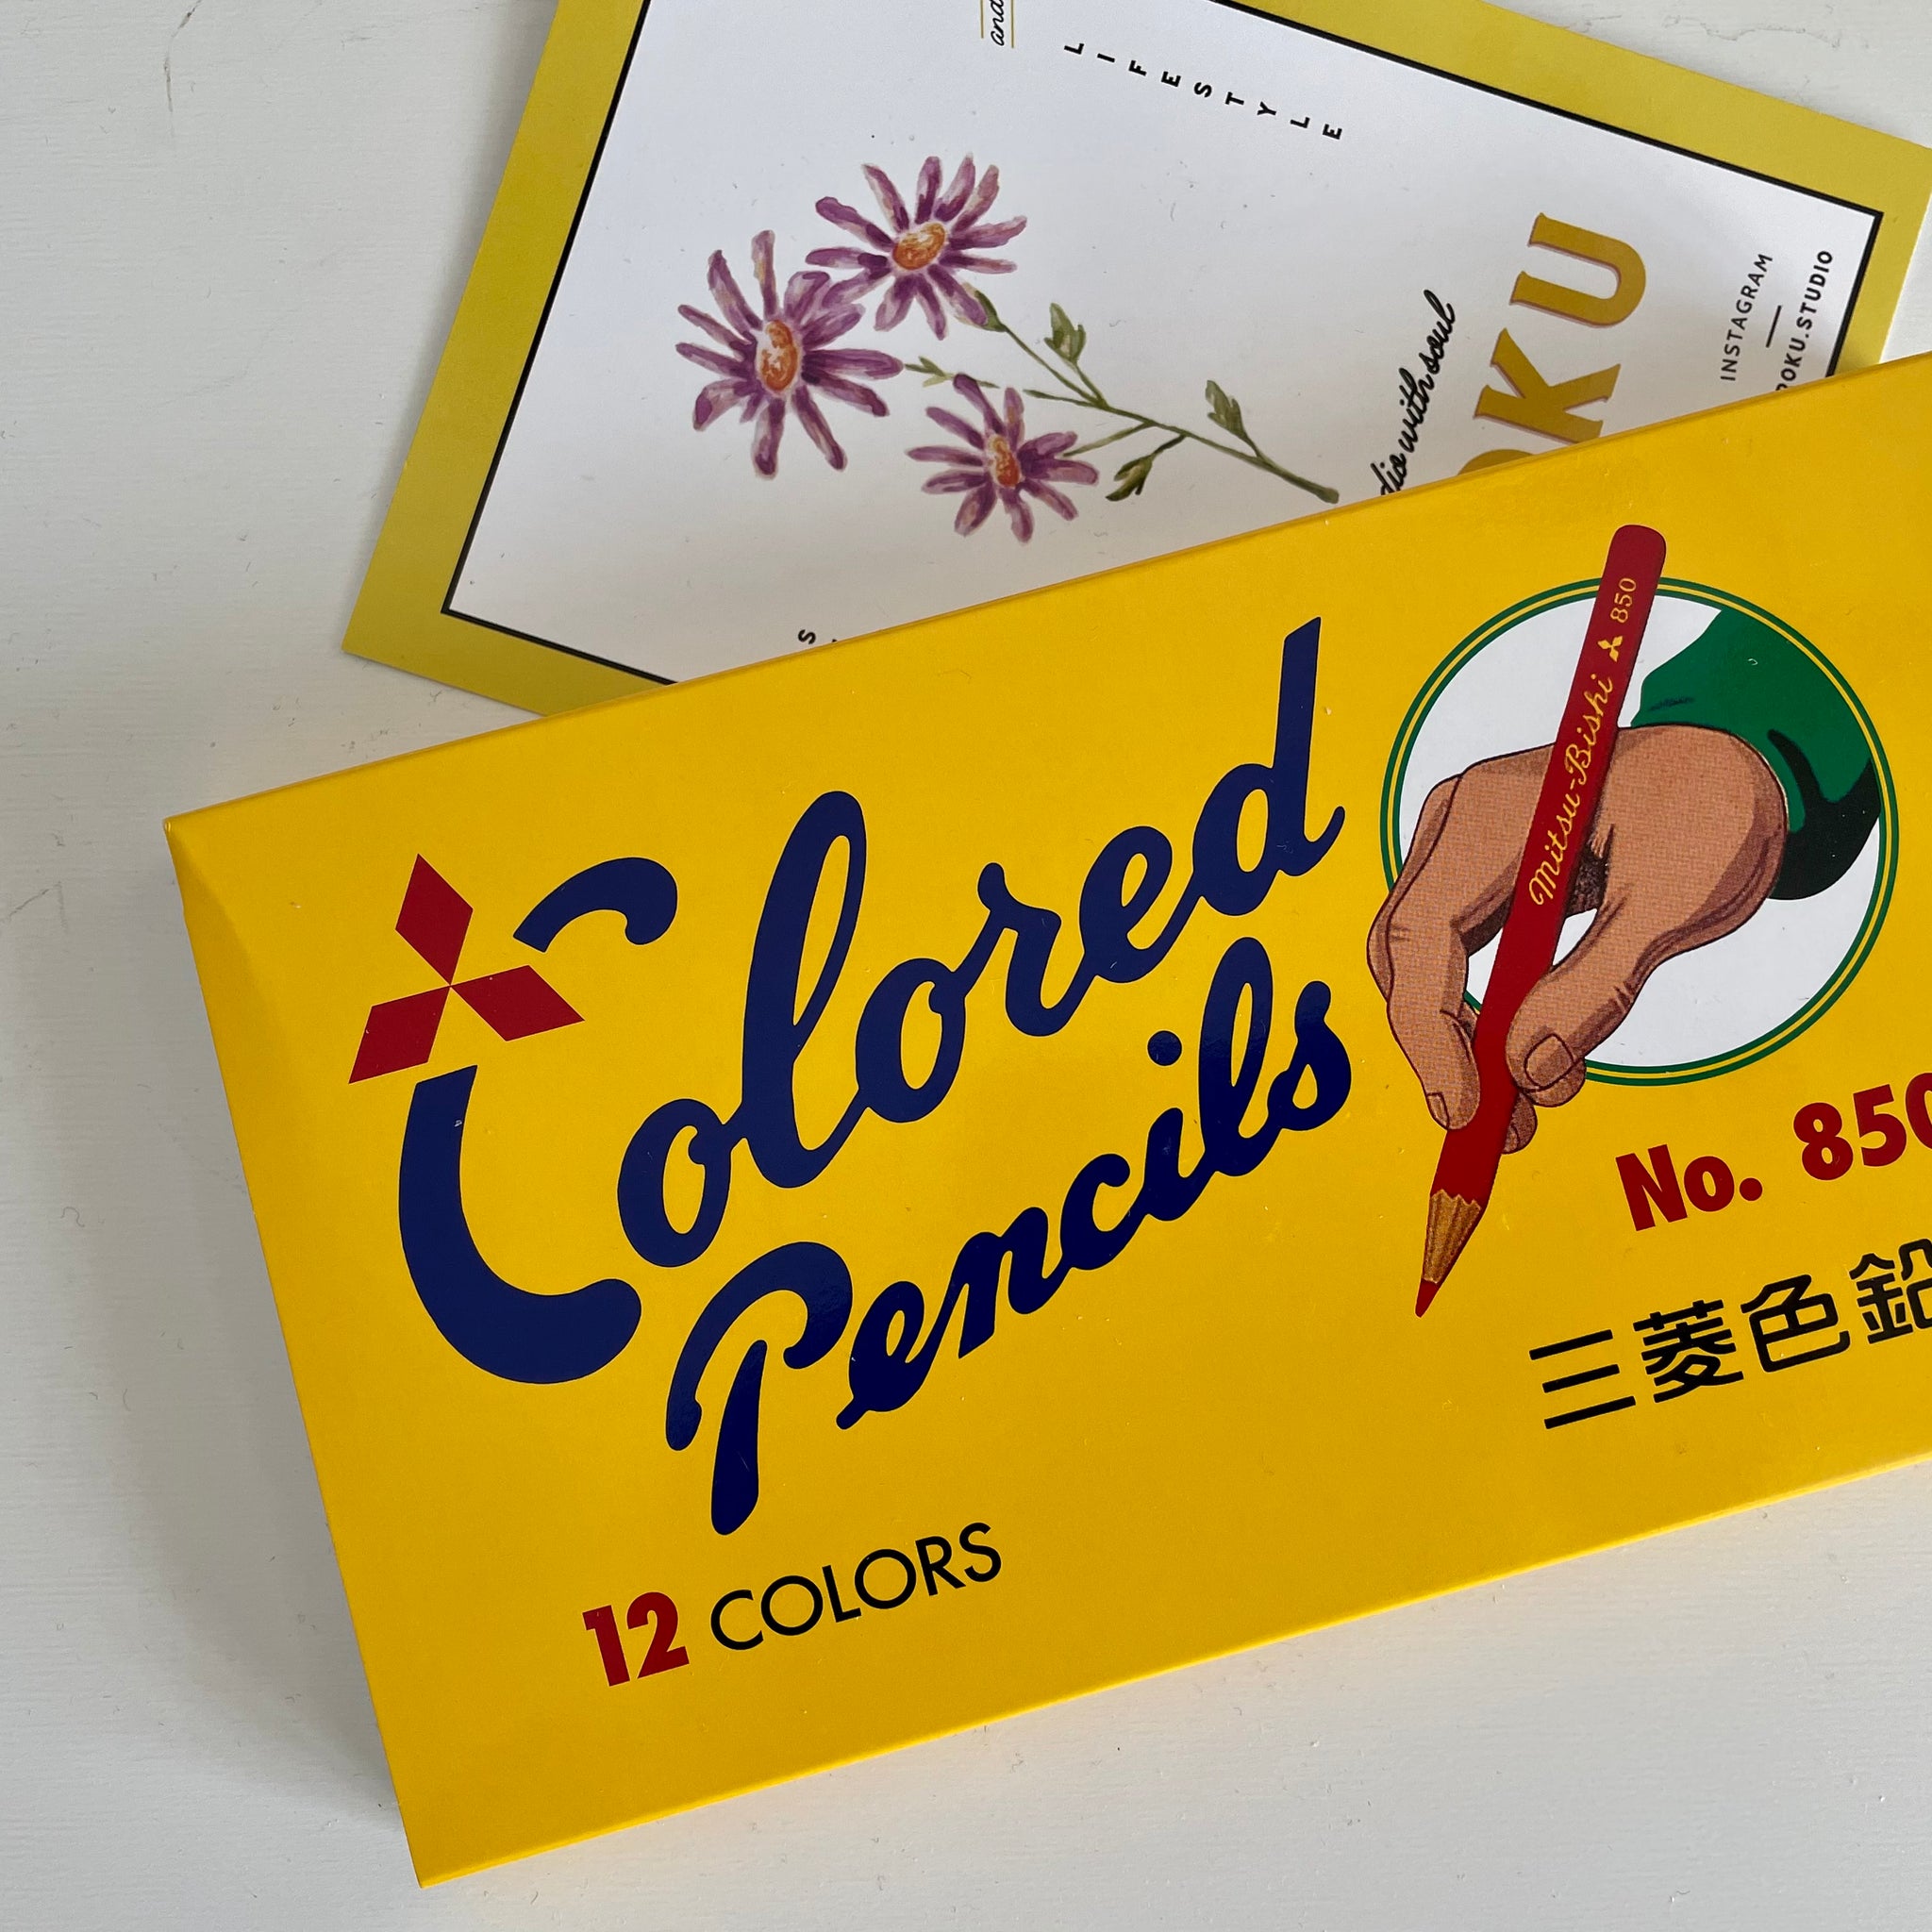 Mitsubishi Colored Pencil 12 color set